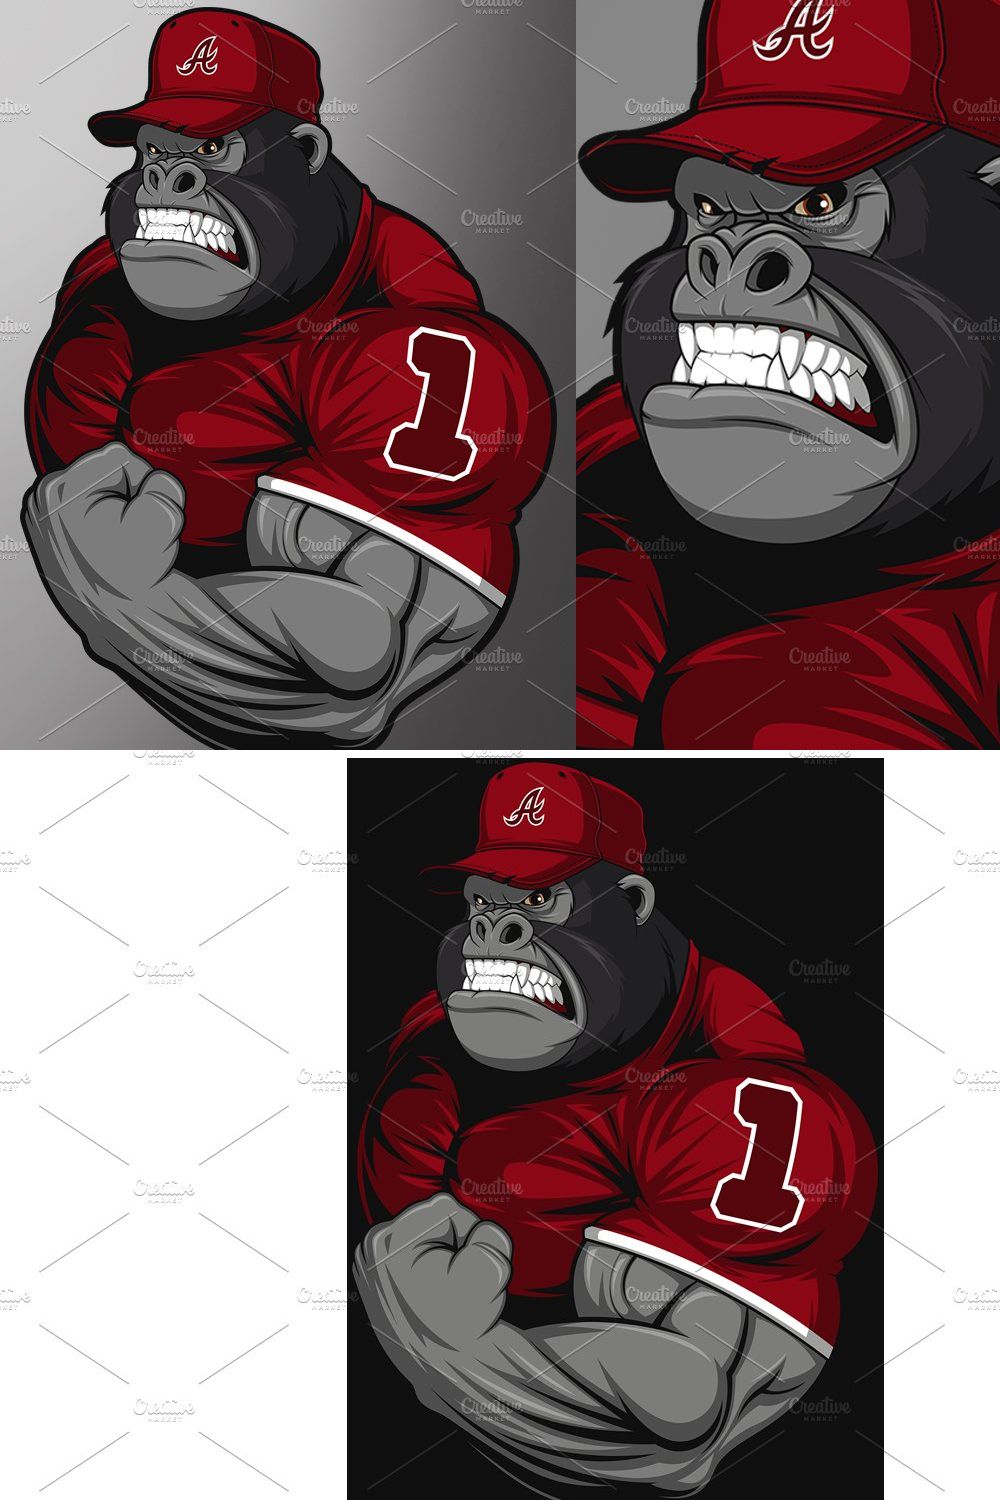 Terrible gorilla athlete pinterest preview image.